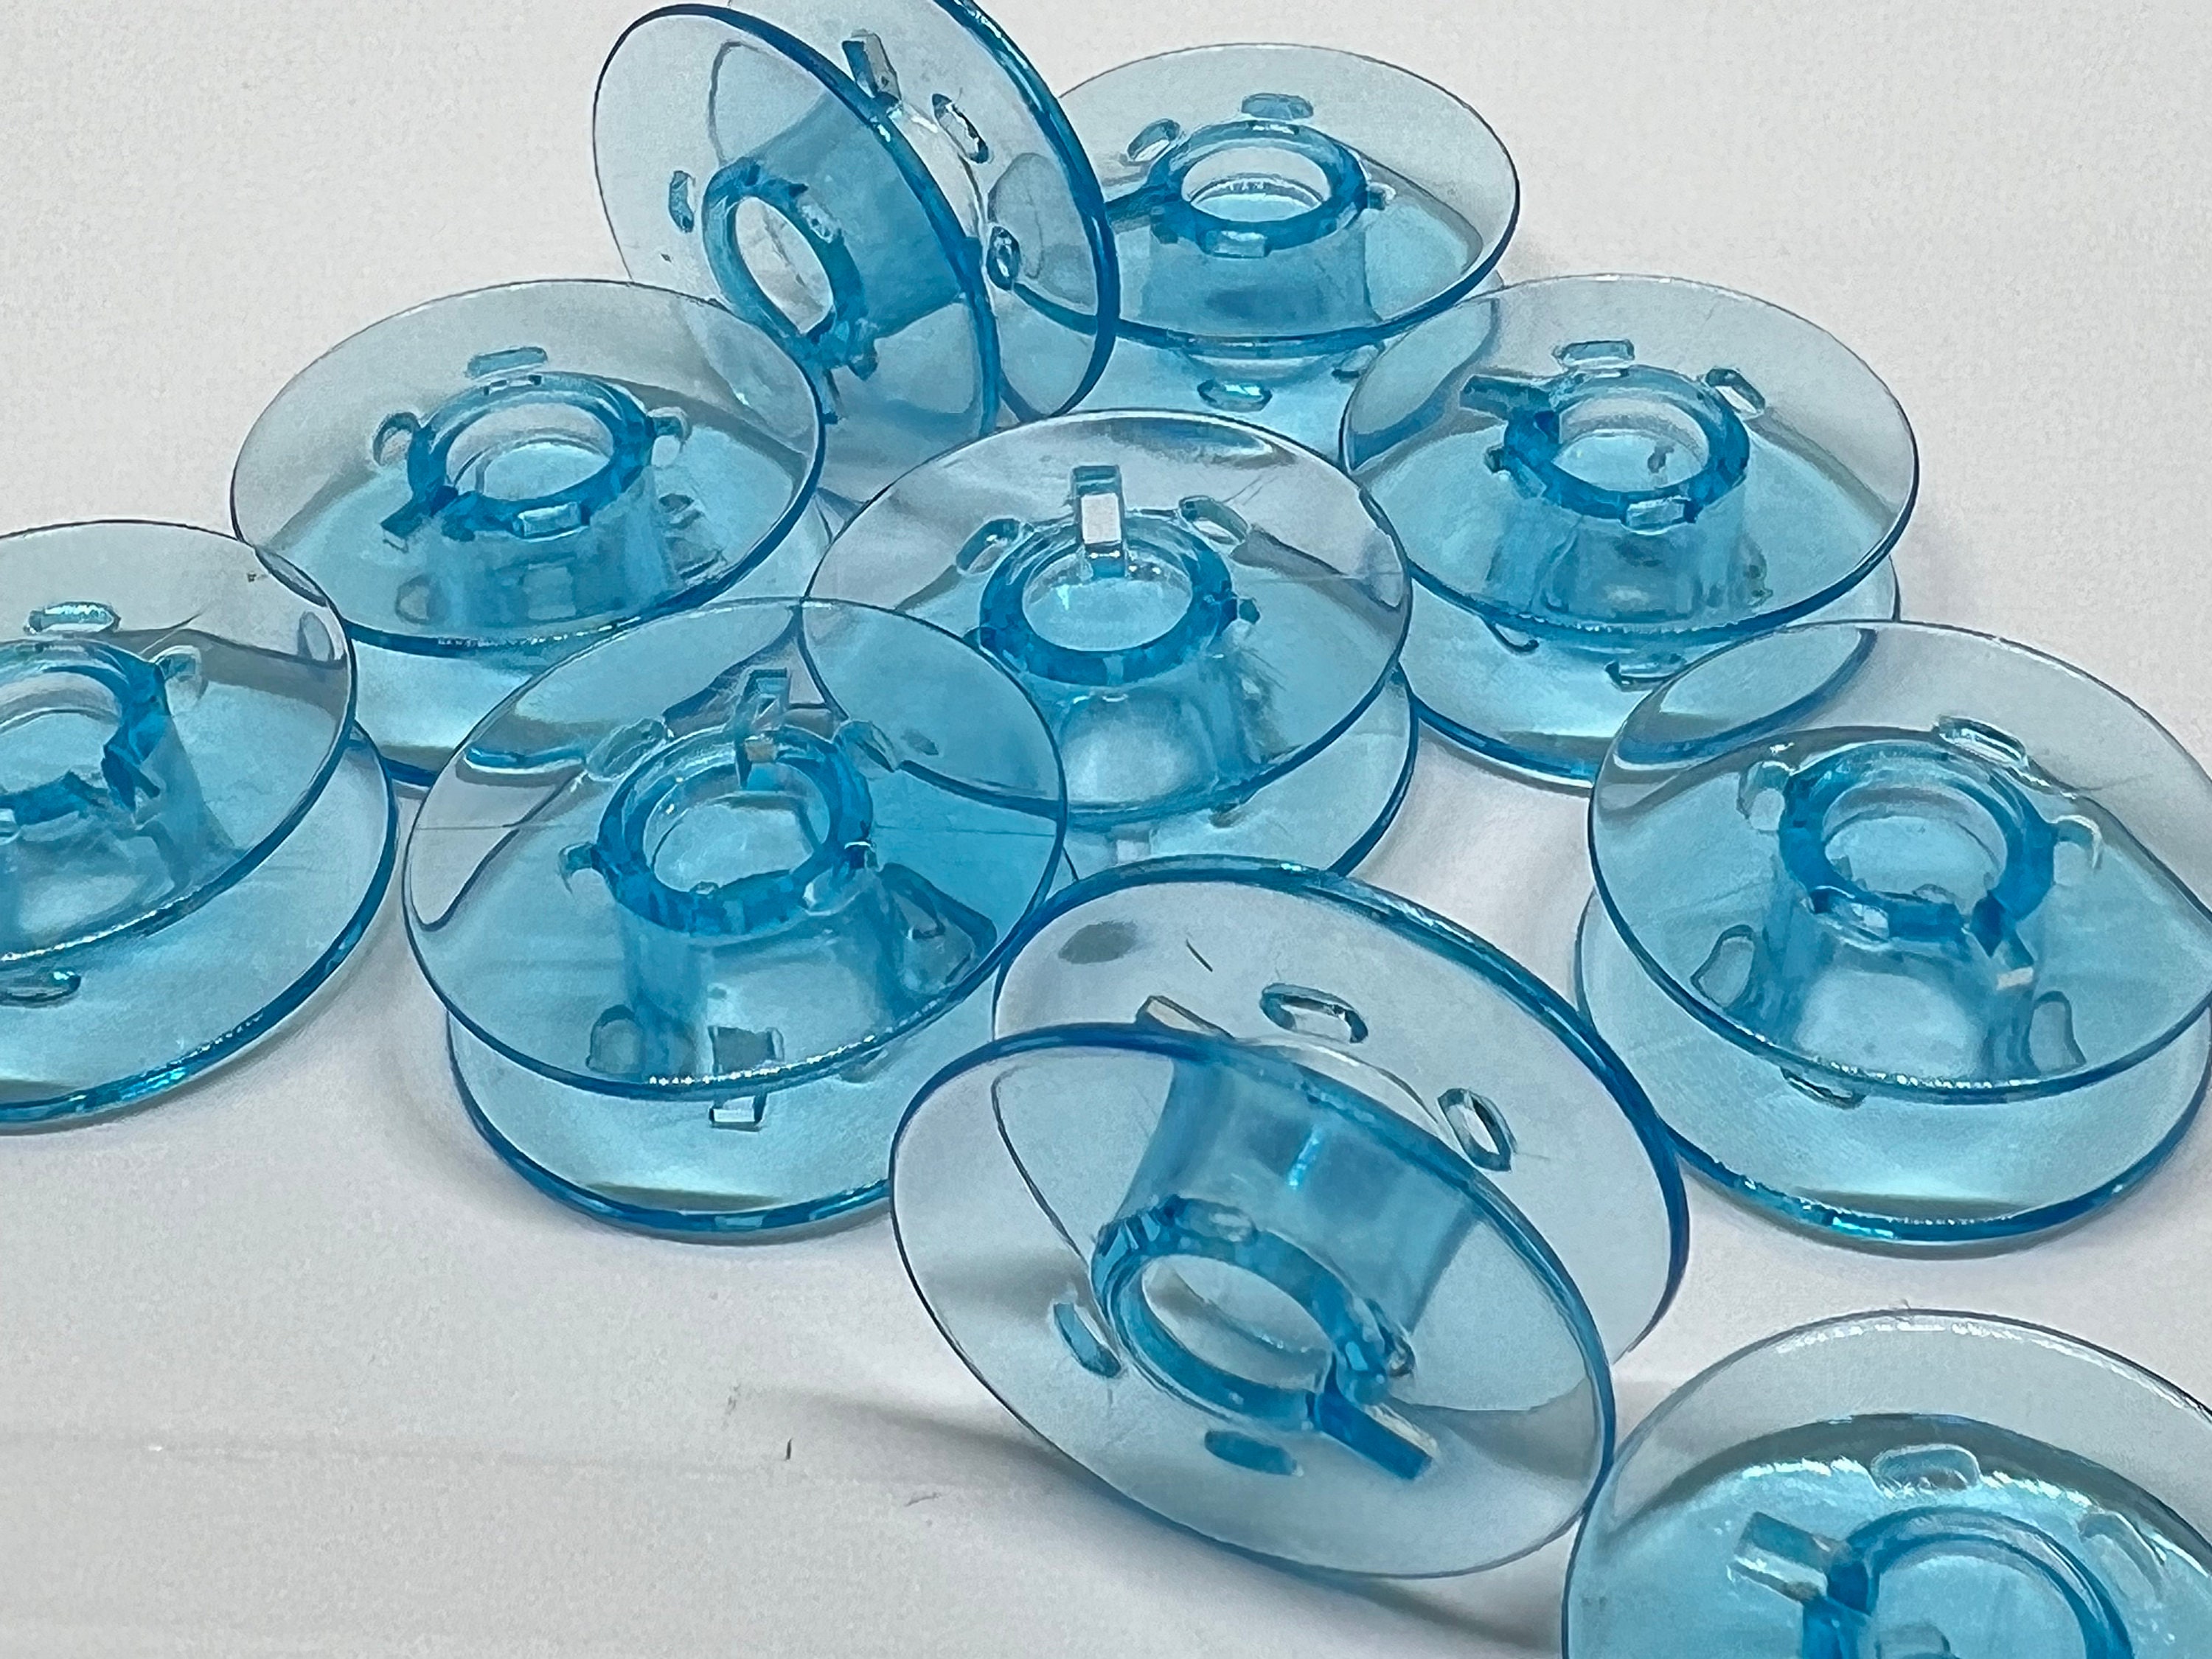 Pfaff BOBBINS 9304097045 Blue Plastic for Sewing Machines 10